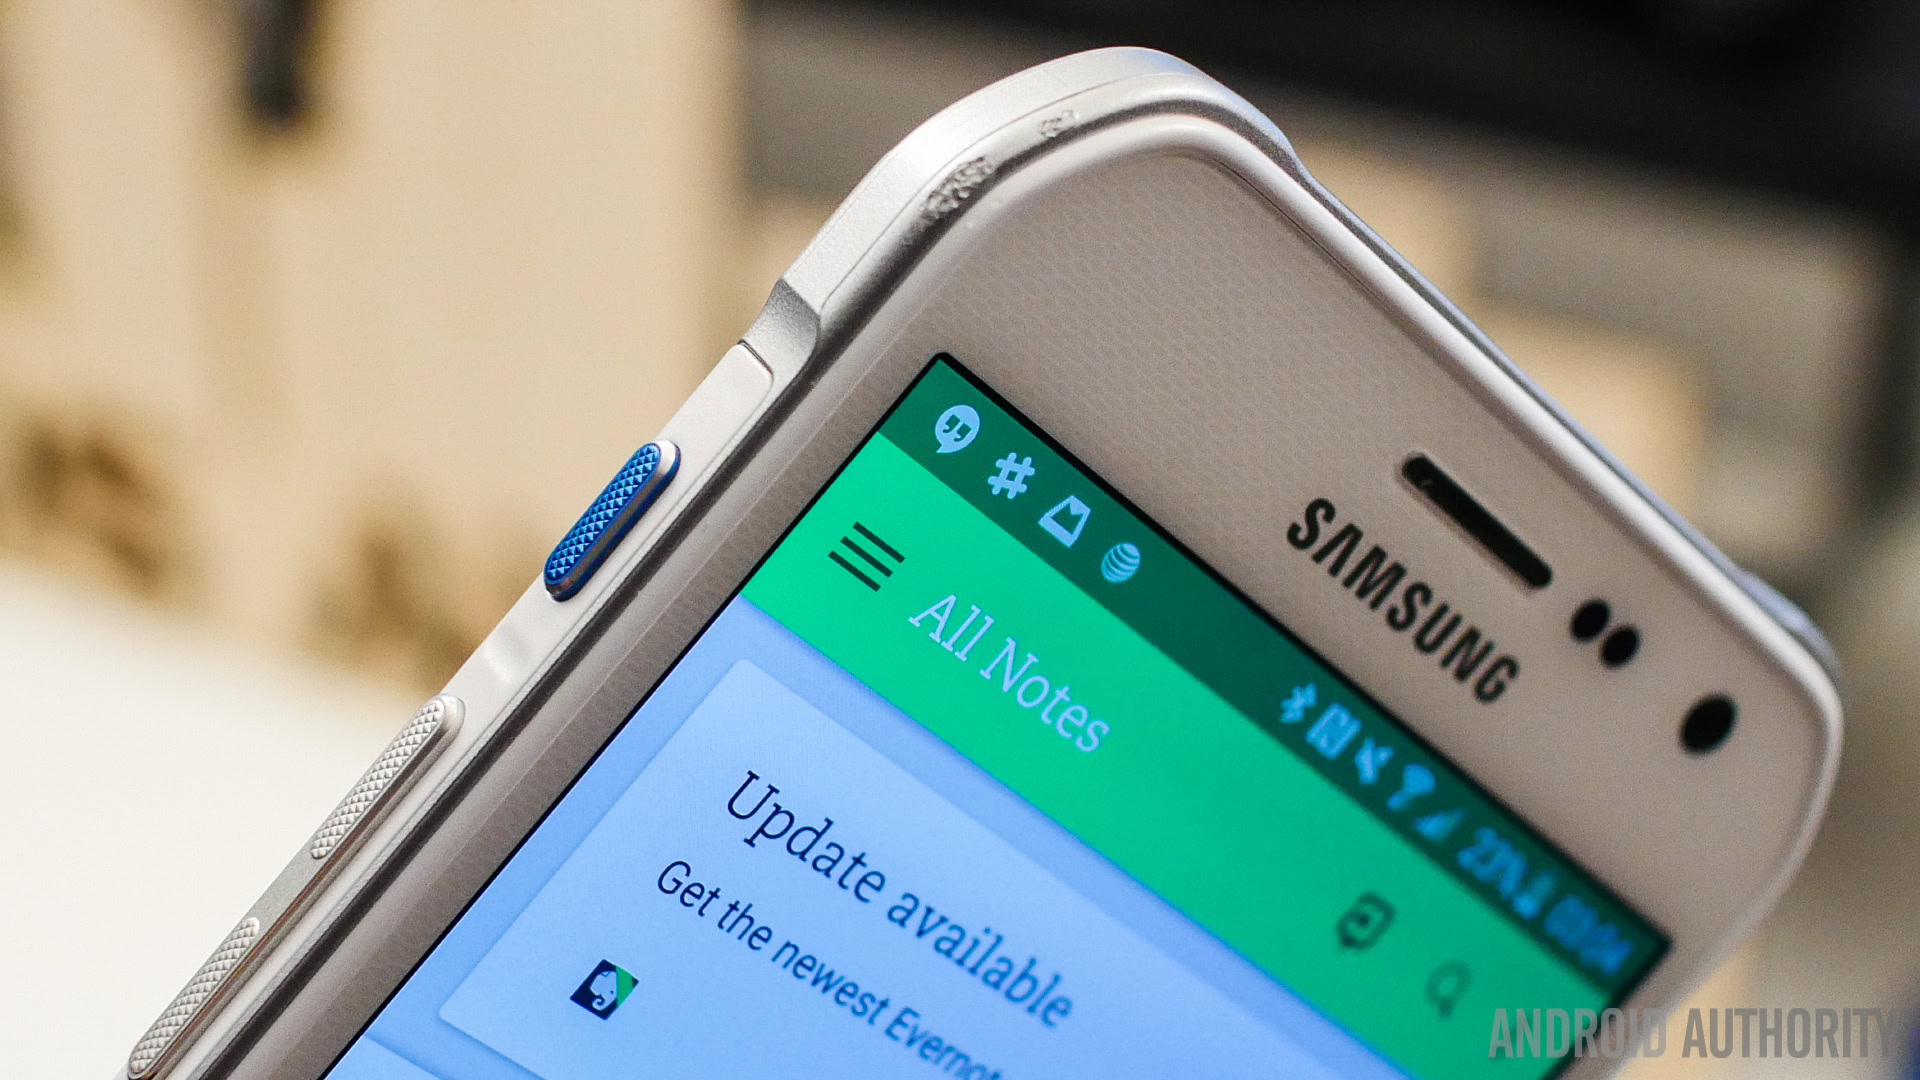 Embryo strand triatlon Samsung Galaxy S6 Active review